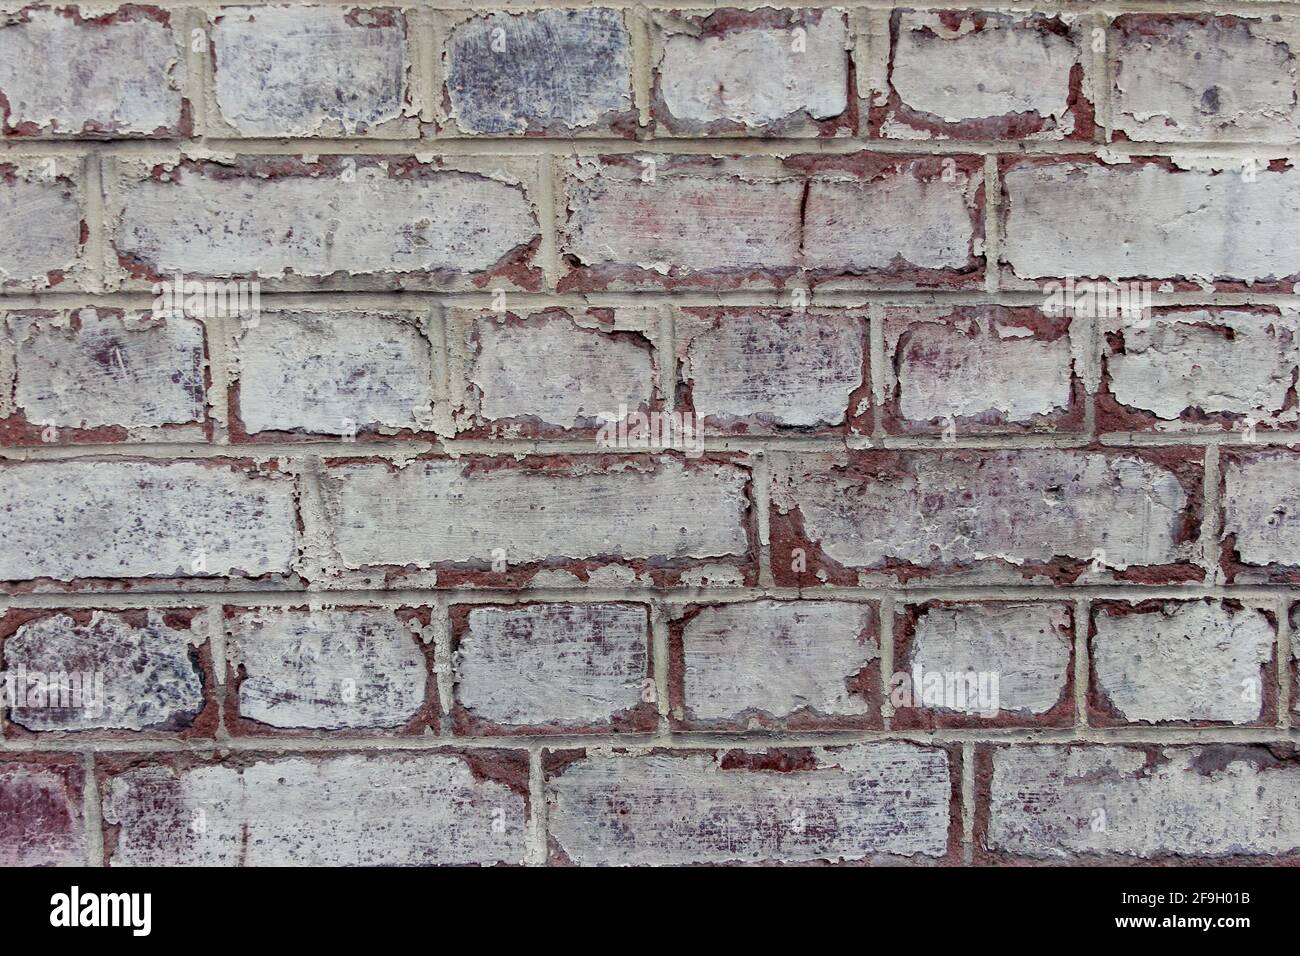 a brick wall as a texture Stock Photo